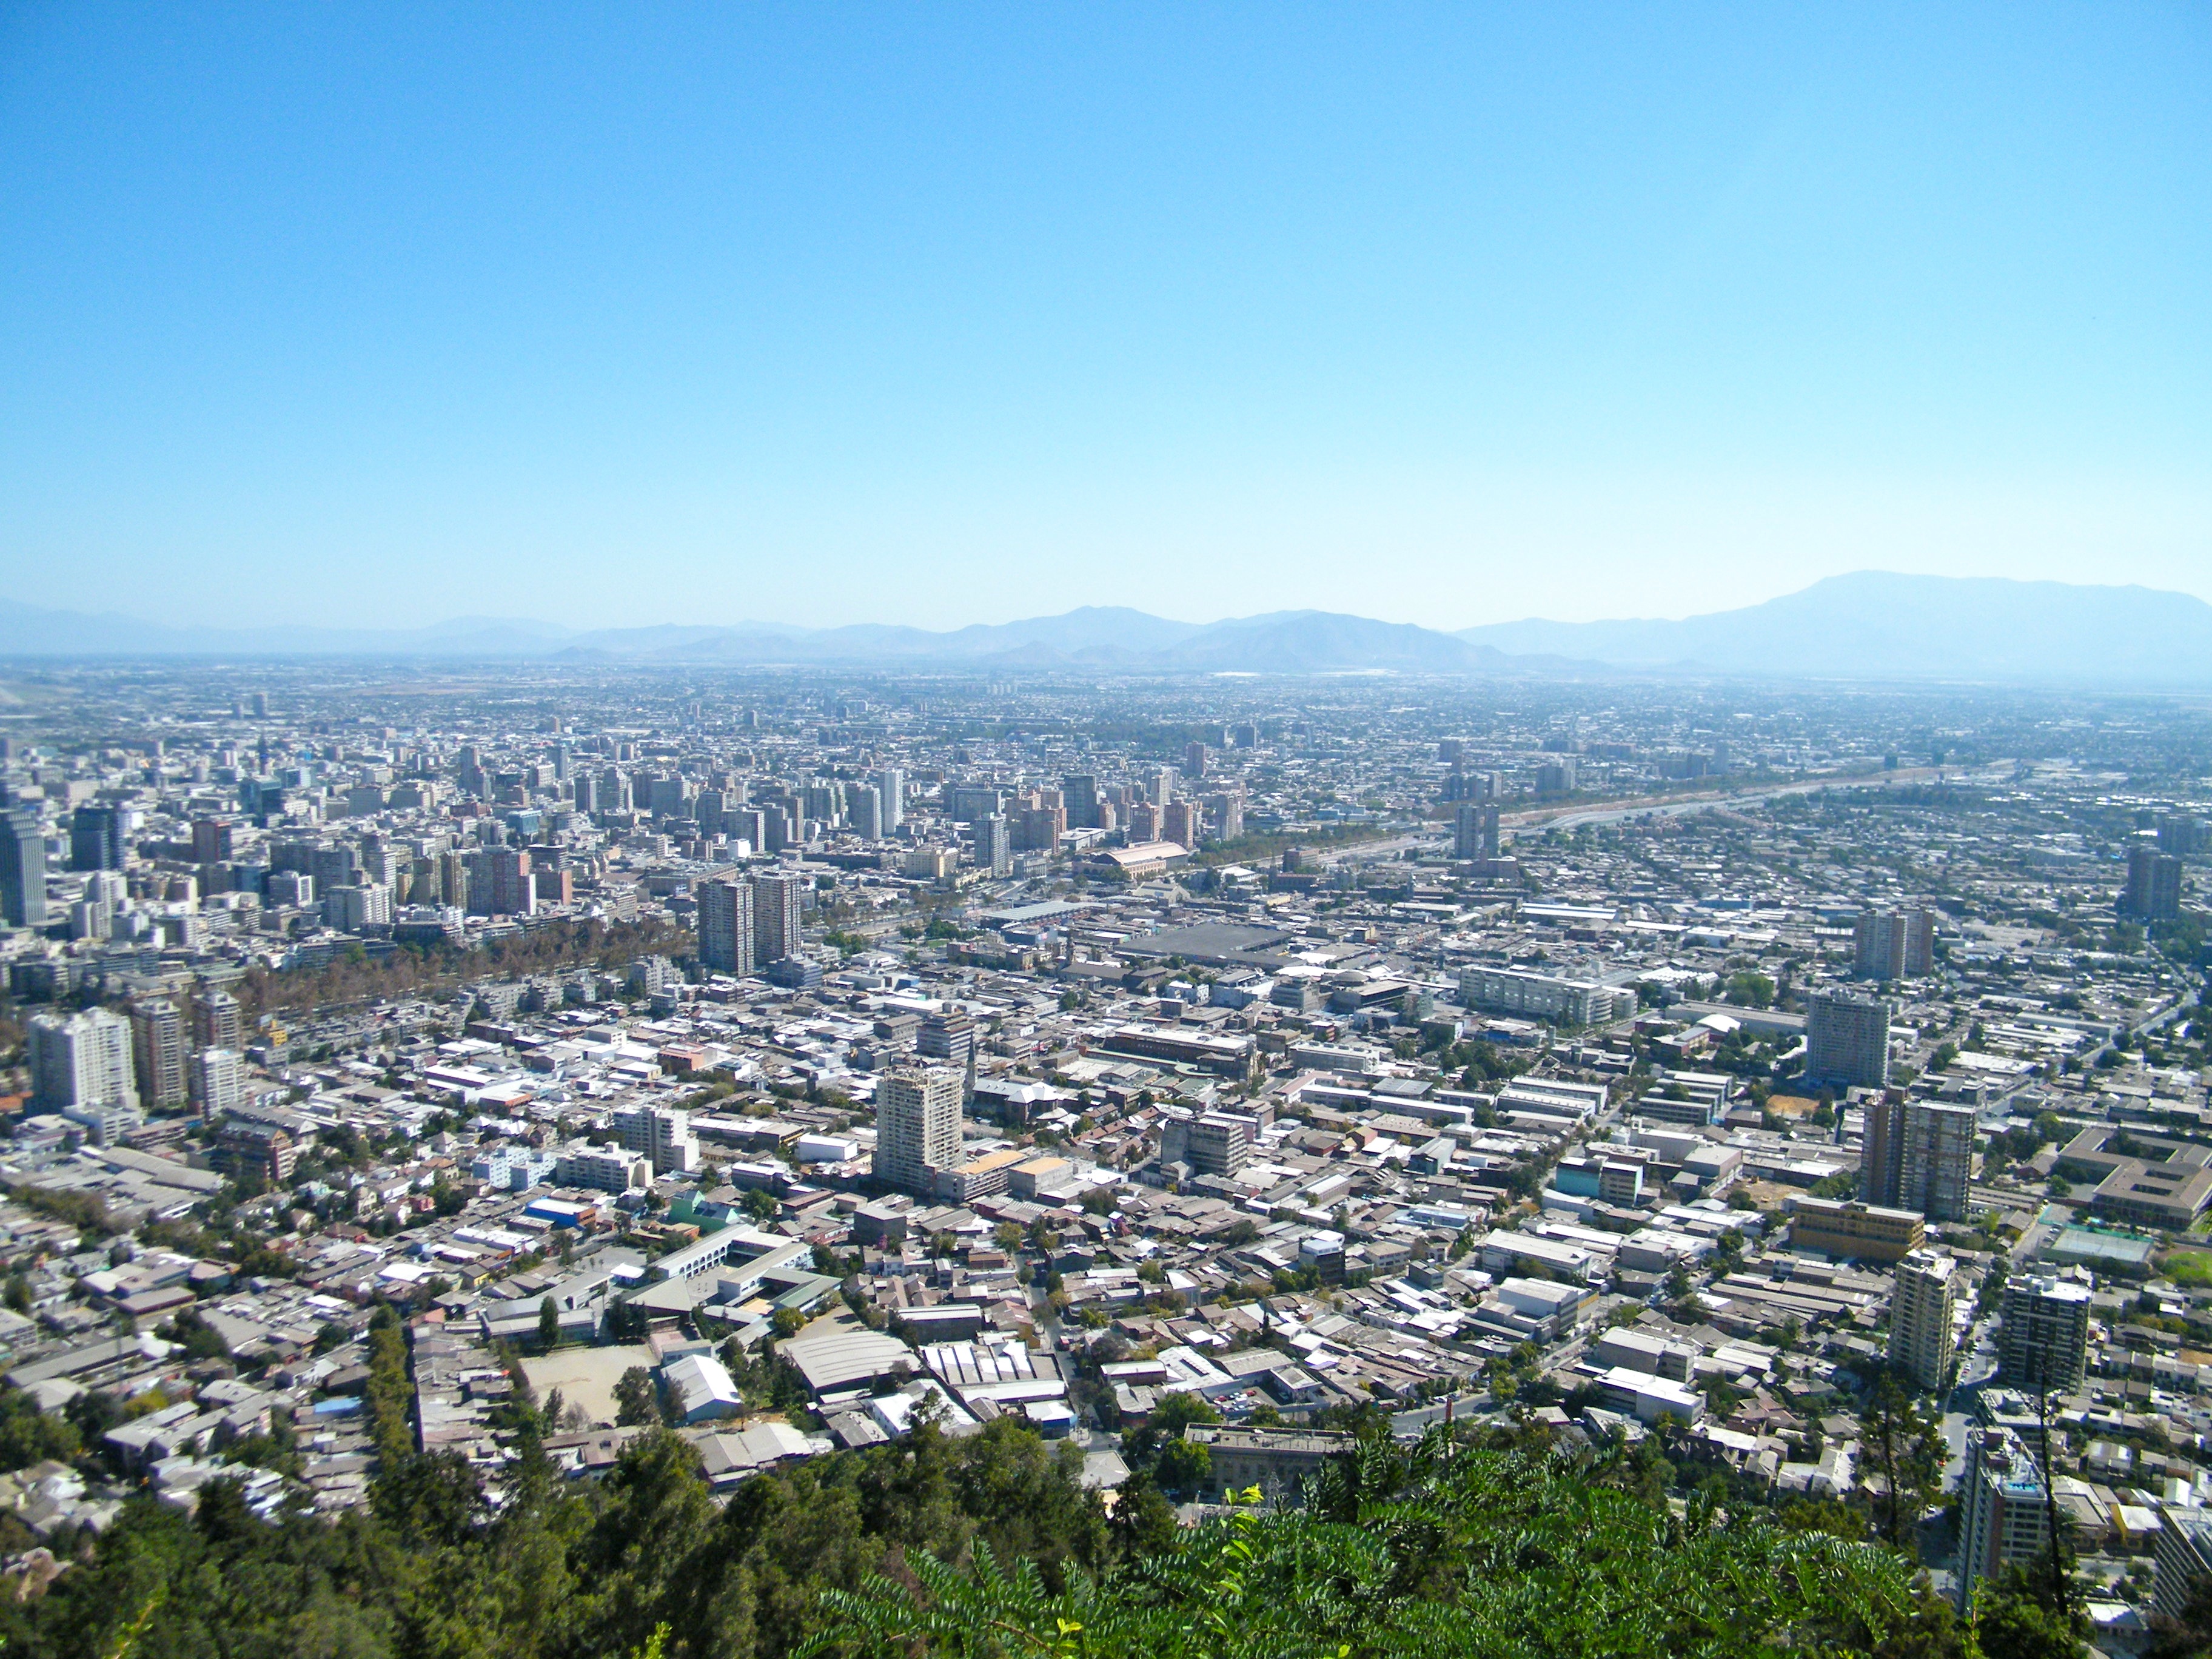 Santiago, Chile (photo credit: Sarah Stierch/flickr)